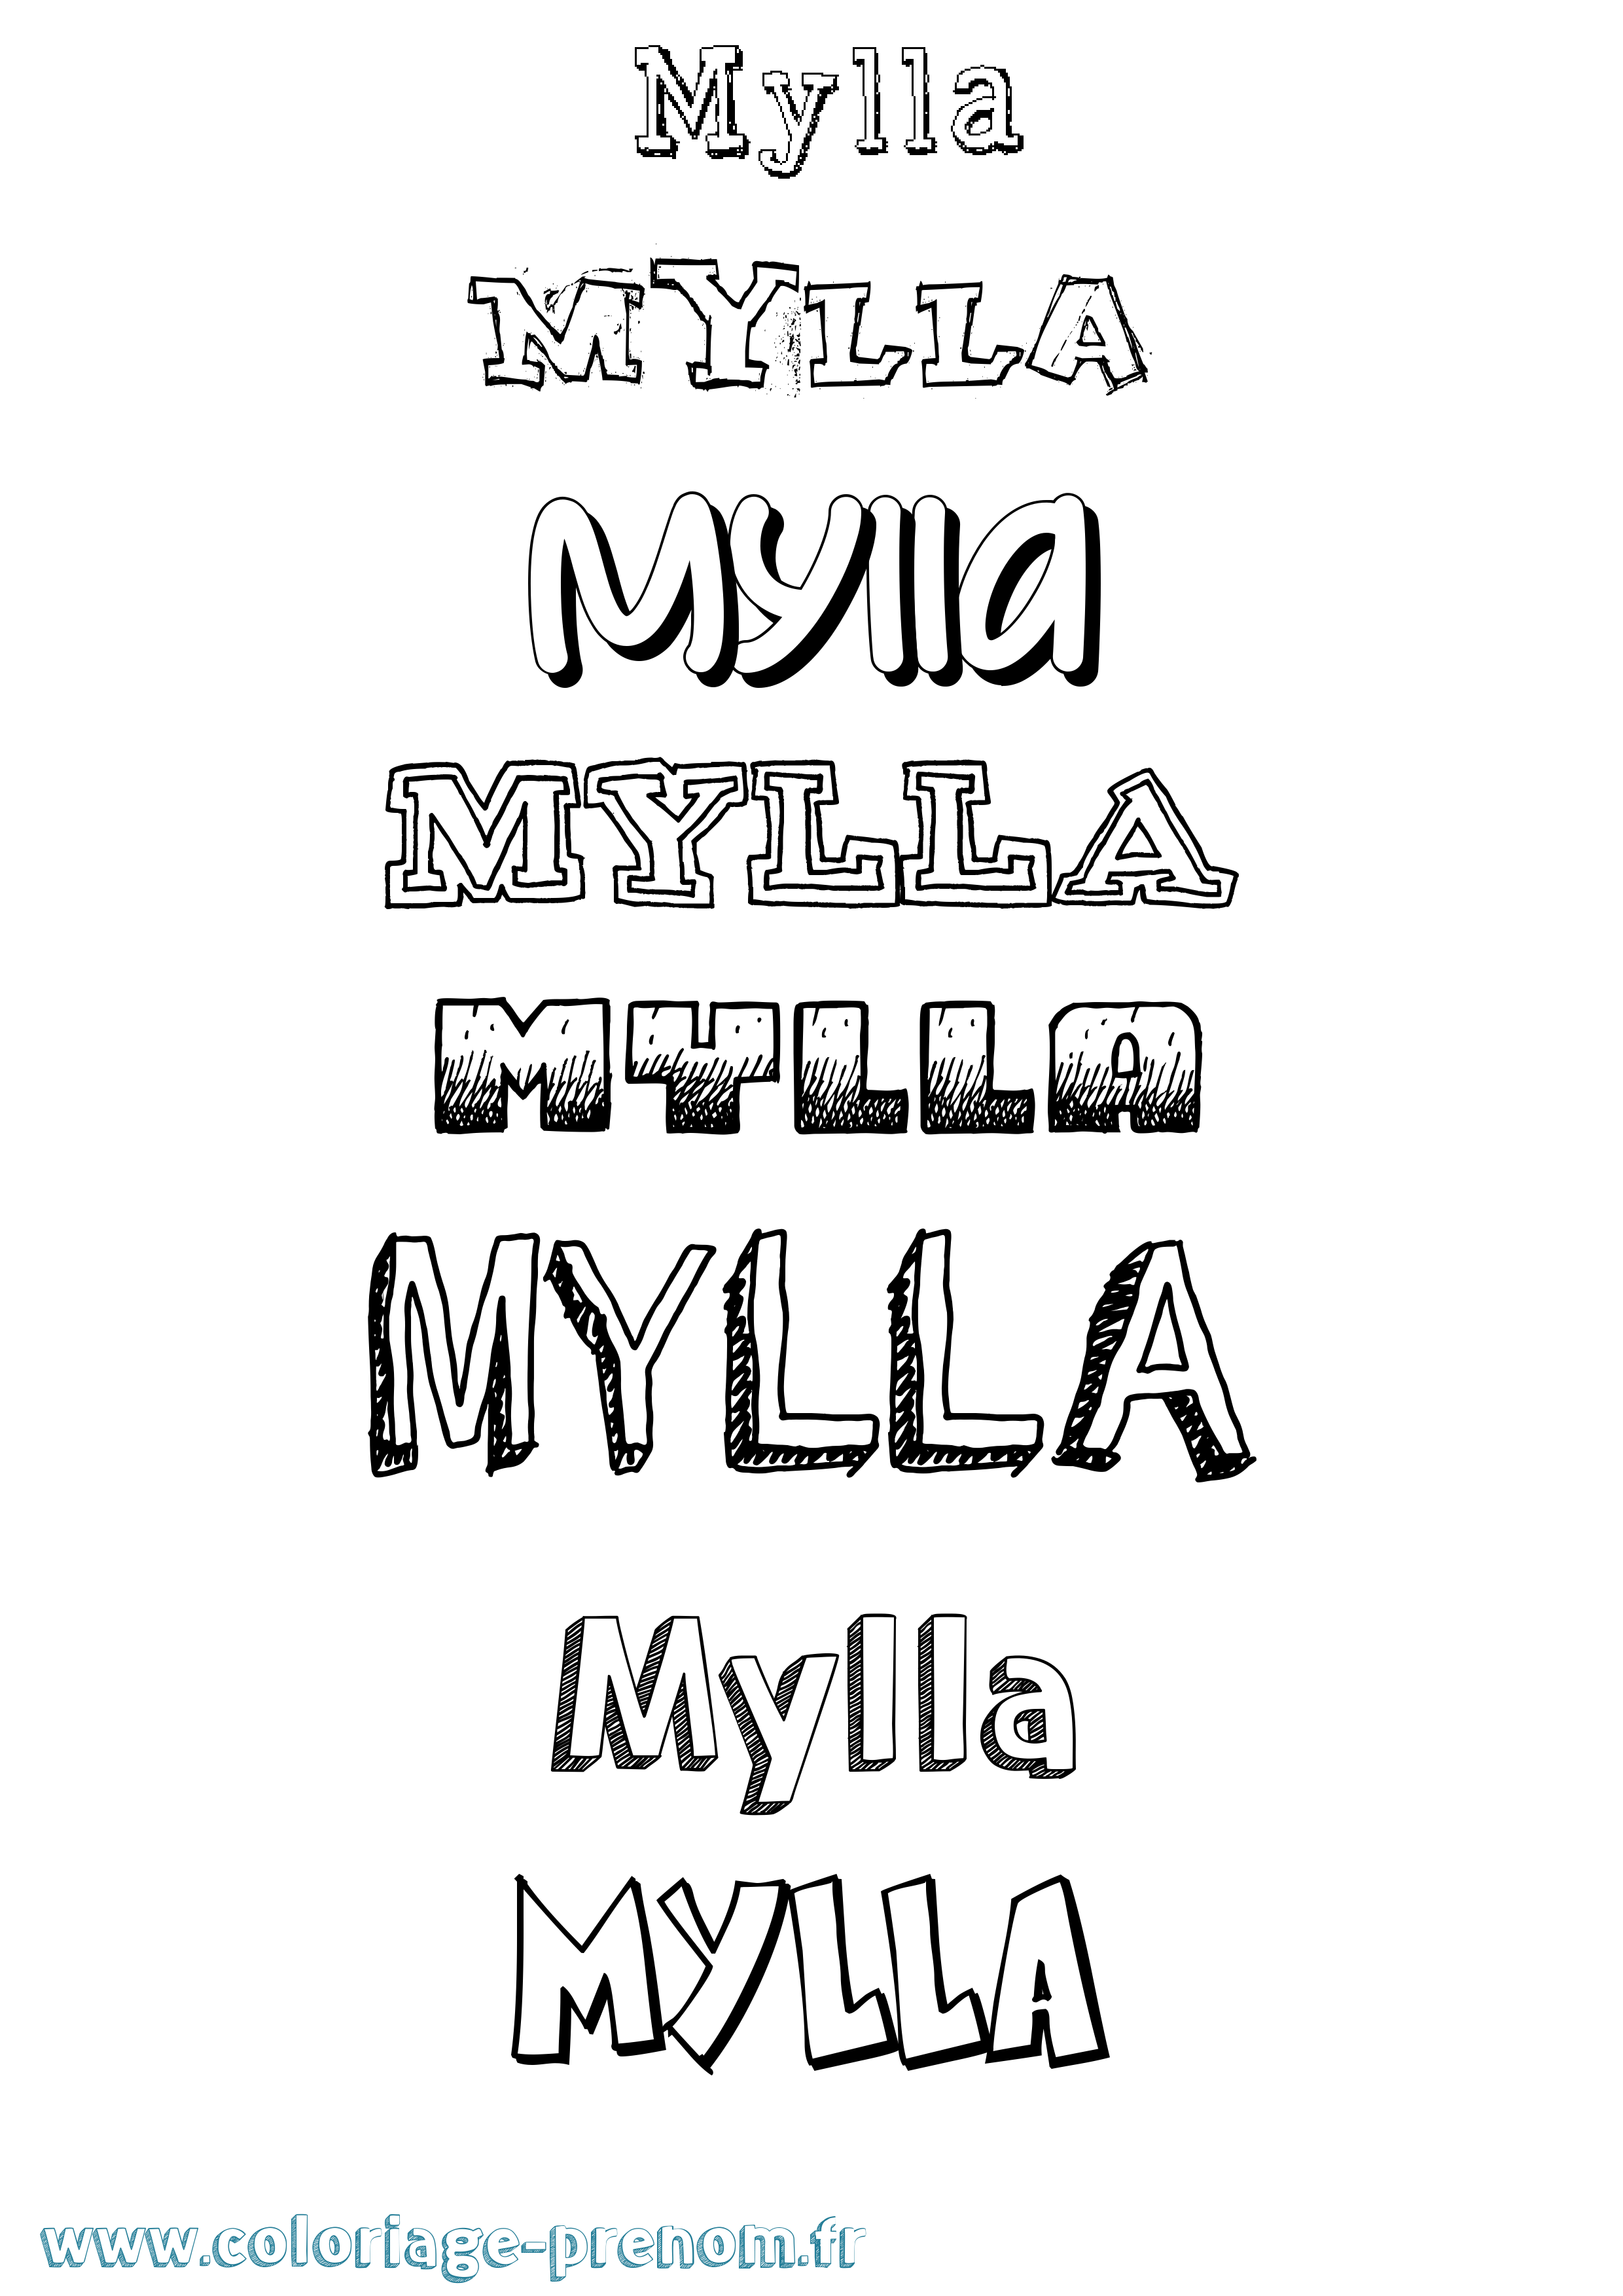 Coloriage prénom Mylla Dessiné